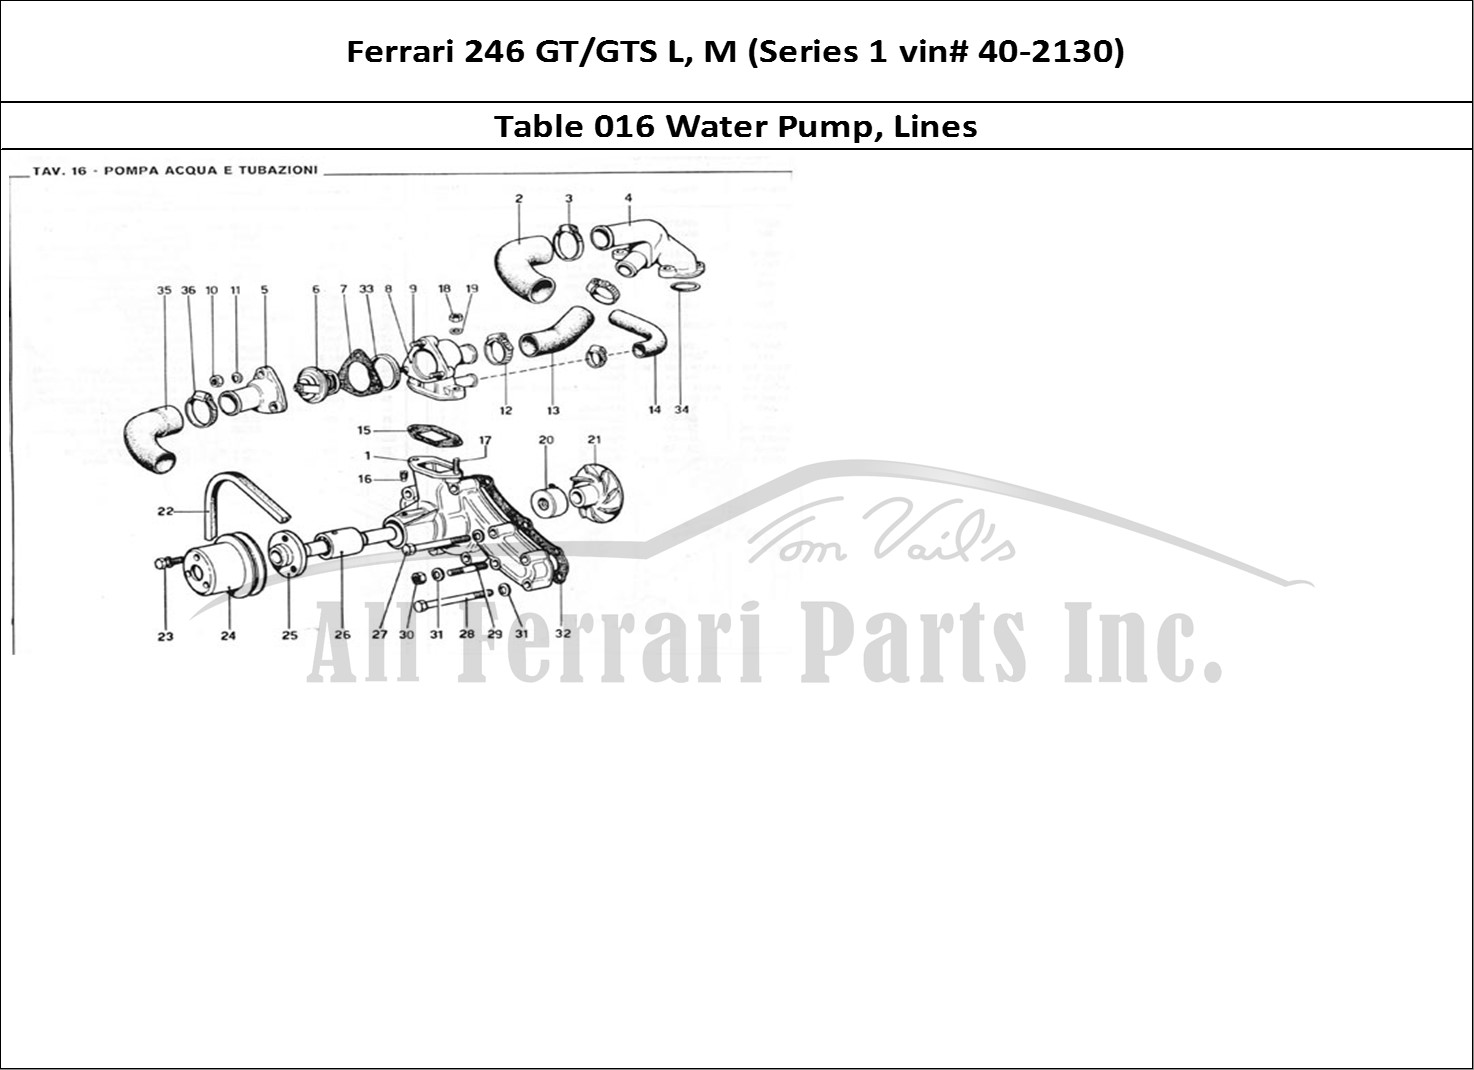 Ferrari Parts Ferrari 246 GT Series 1 Page 016 Water Pump and Pipes